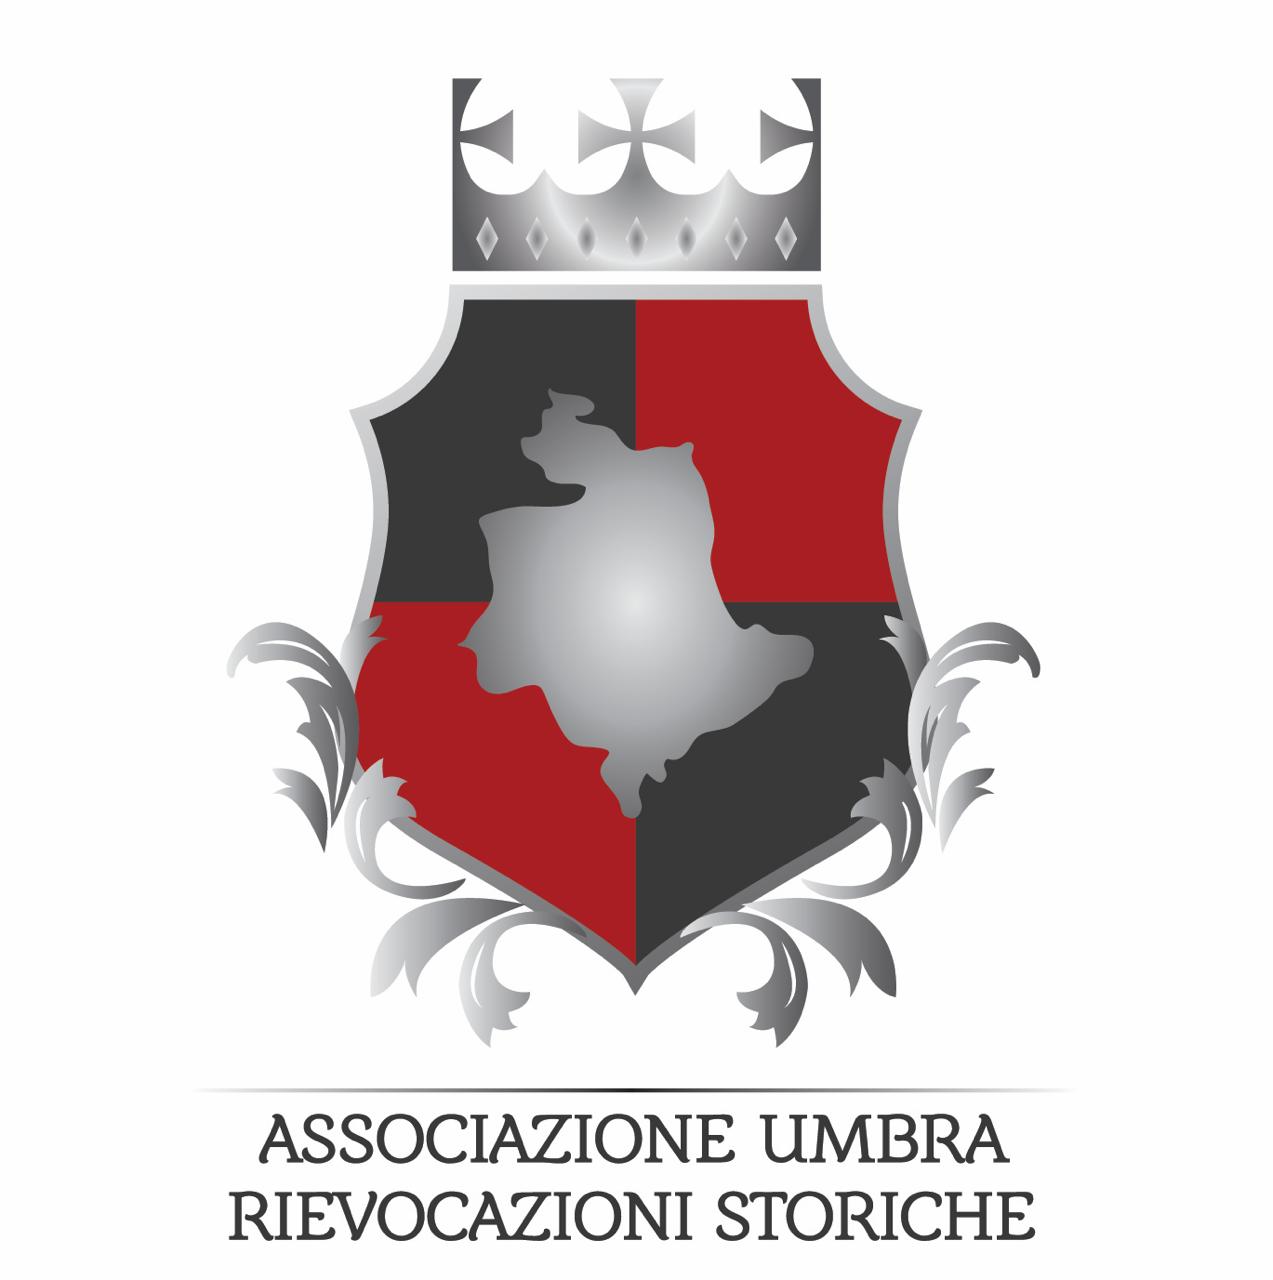 Associazione Umbria Rievocazioni Storiche